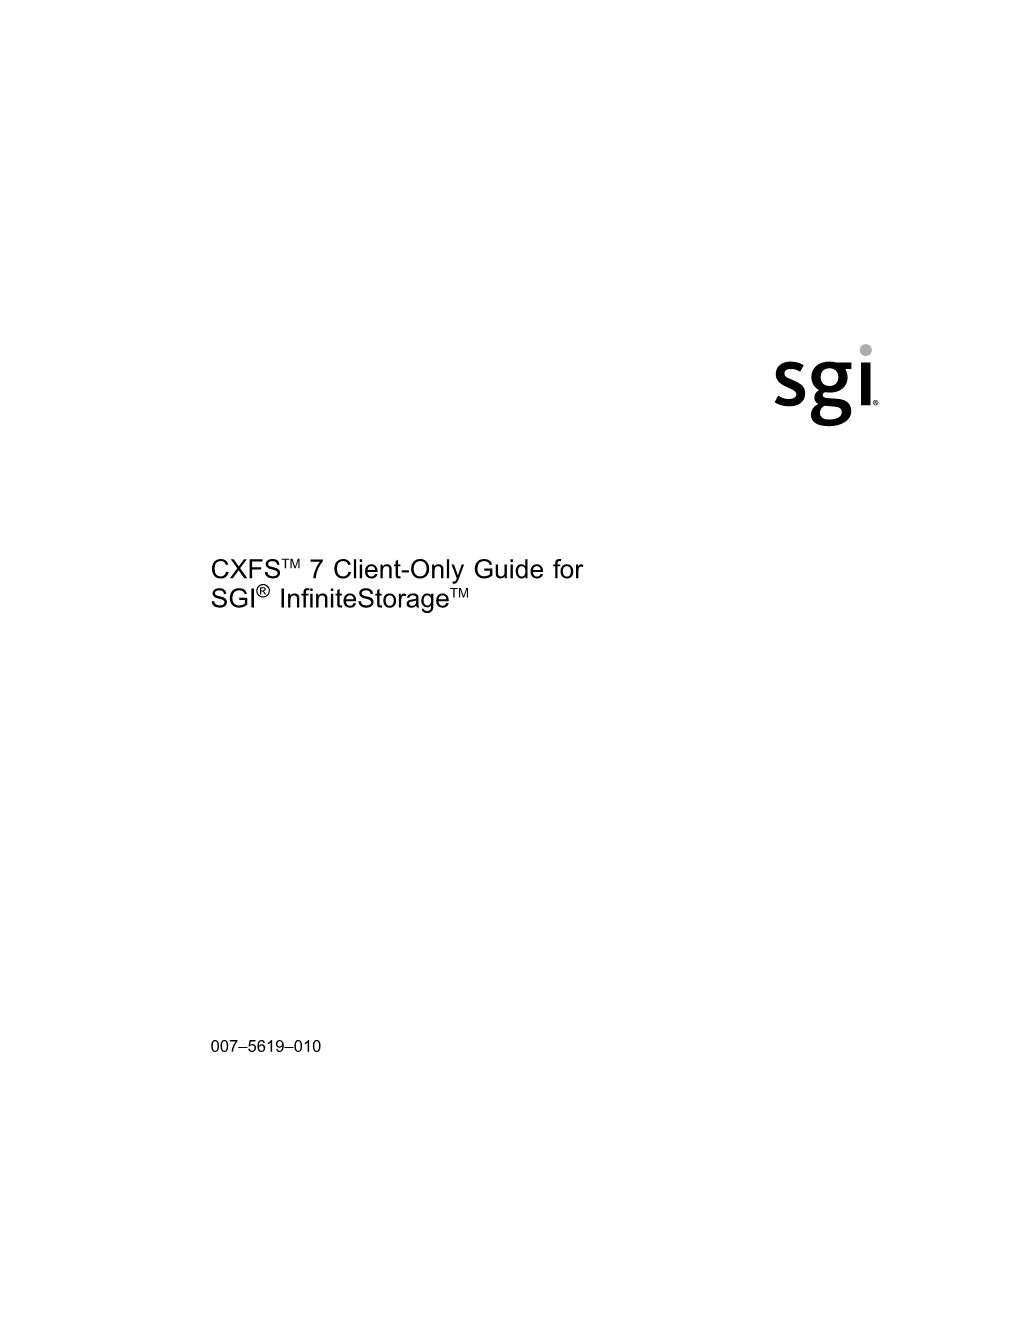 CXFSTM 7 Client-Only Guide for SGI® Infinitestoragetm